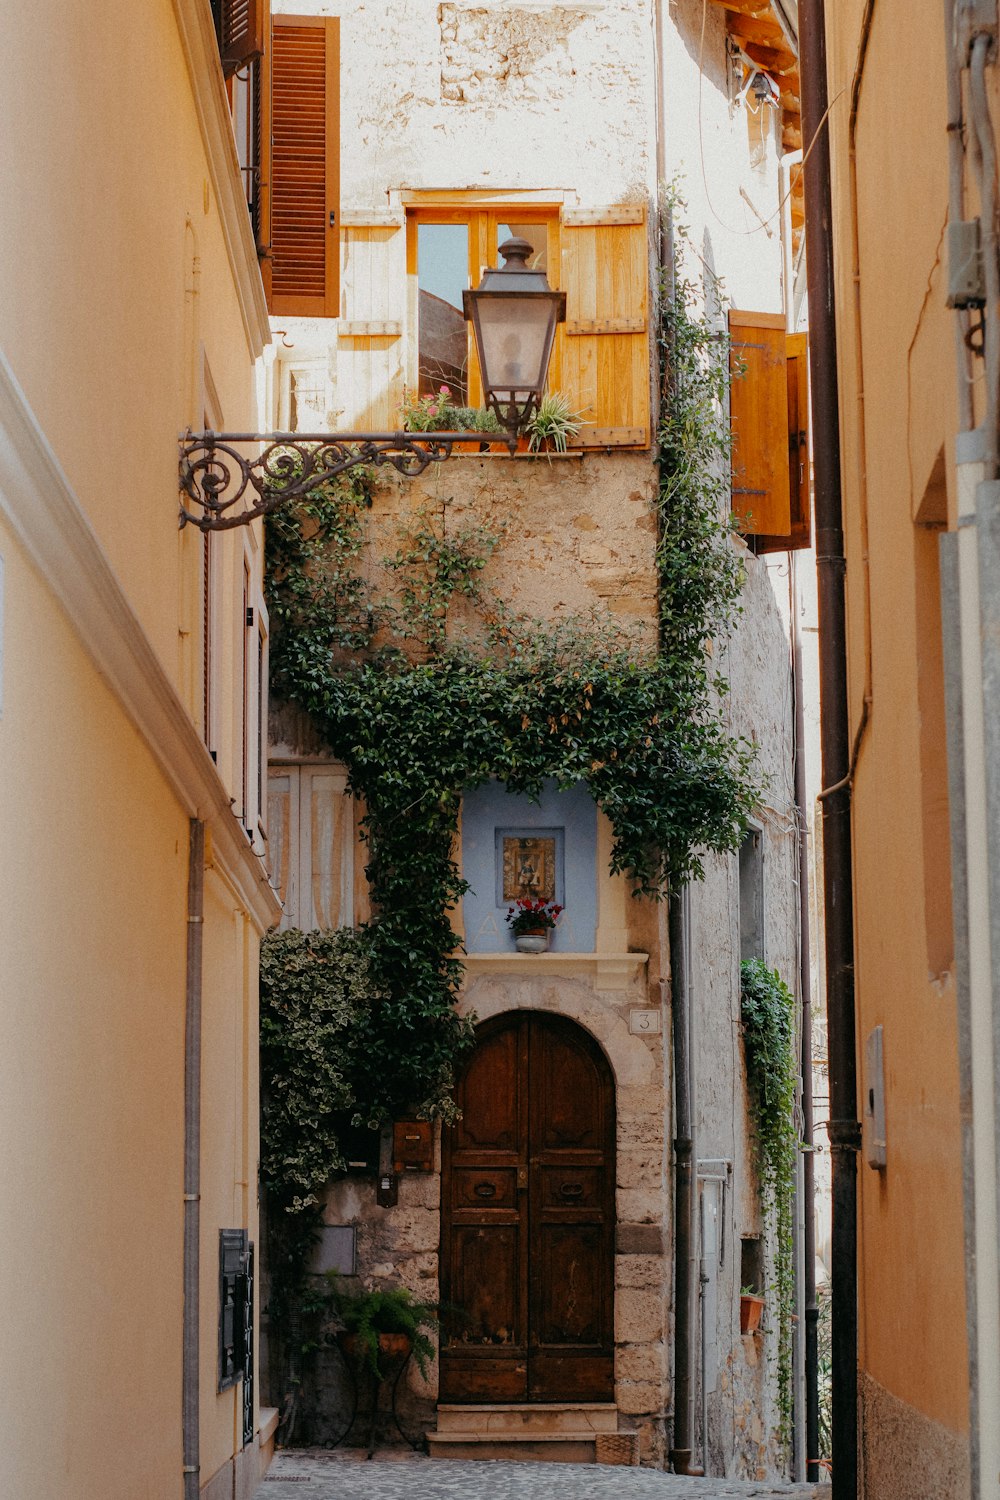 a narrow alley way with a wooden door